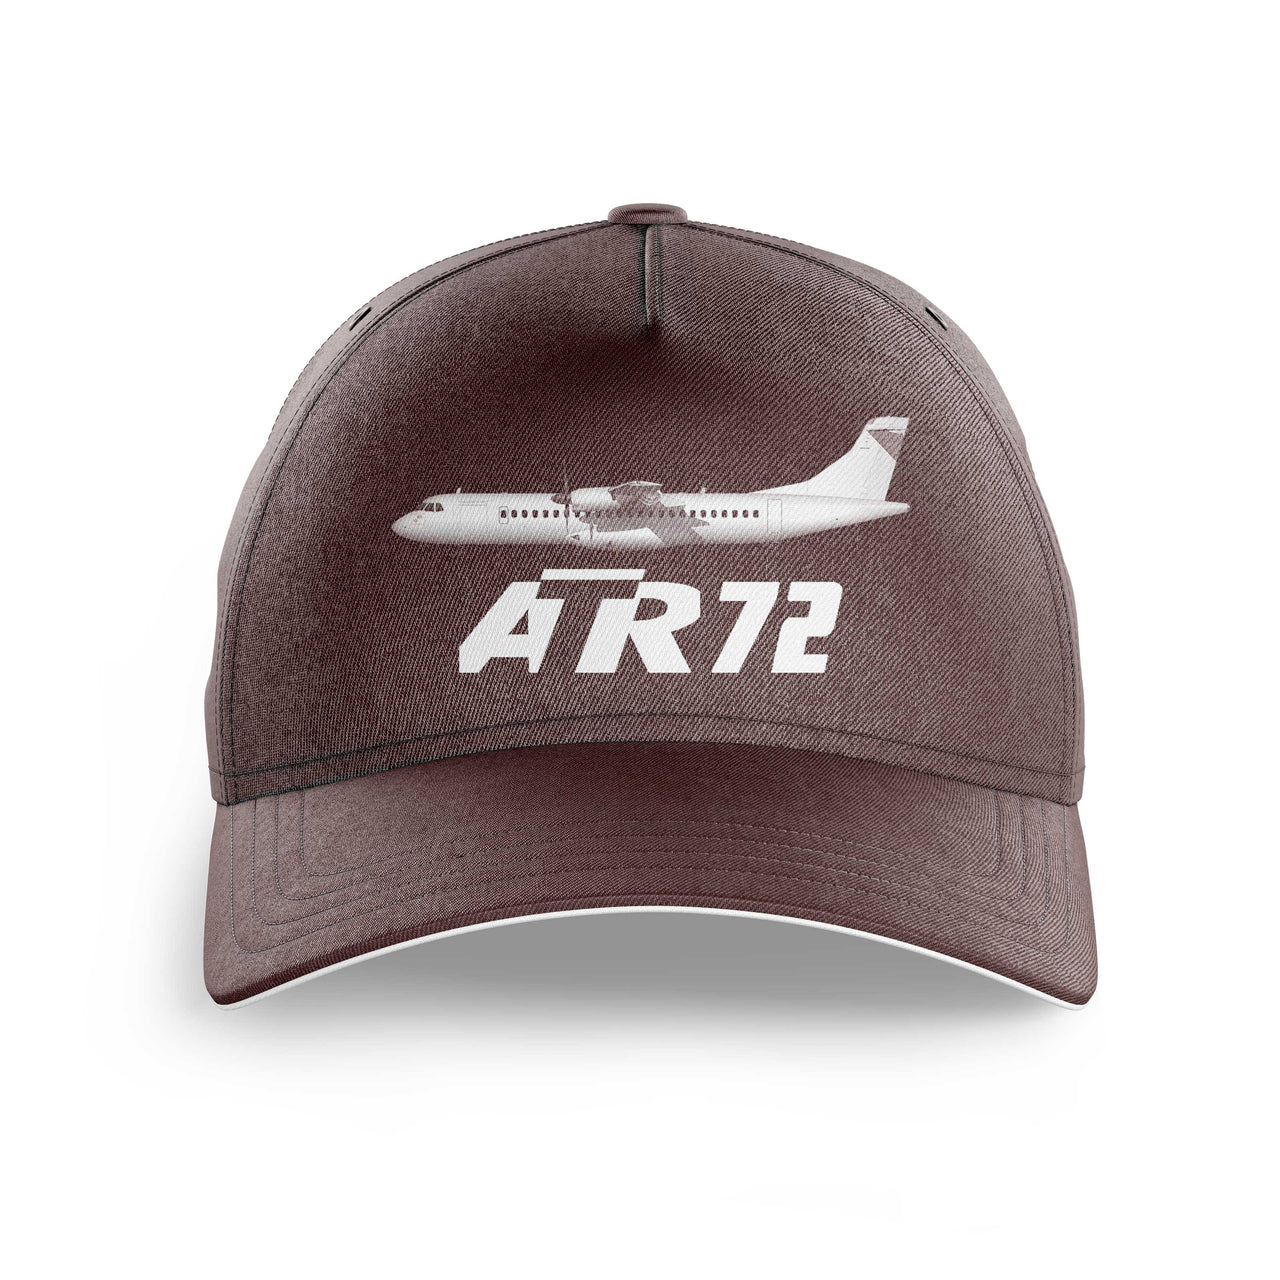 The ATR72 Printed Hats